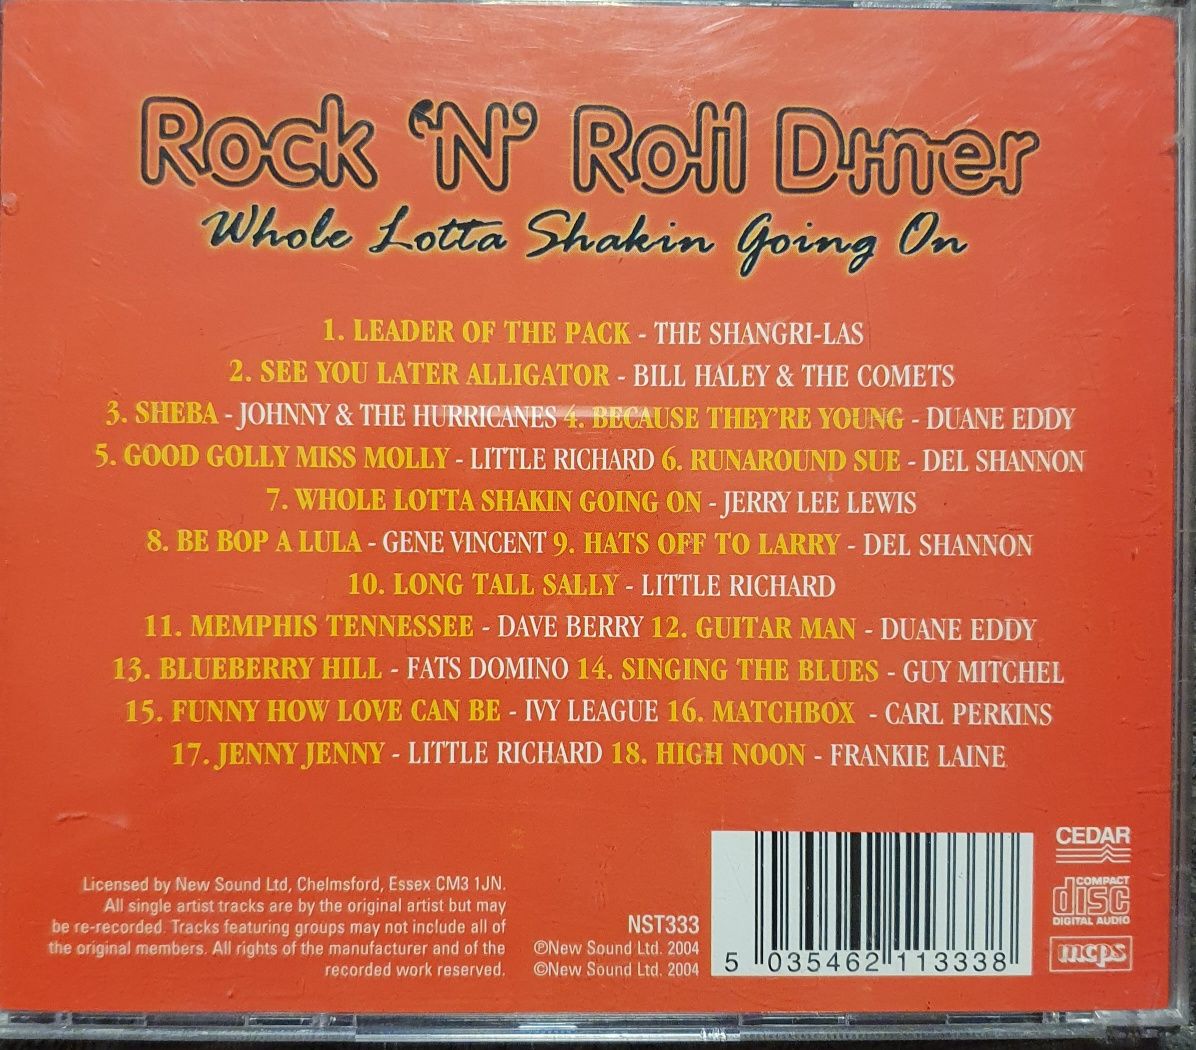 Rock 'N' Roll Diner - płyta cd - największe przeboje rokendrolowe. Pol